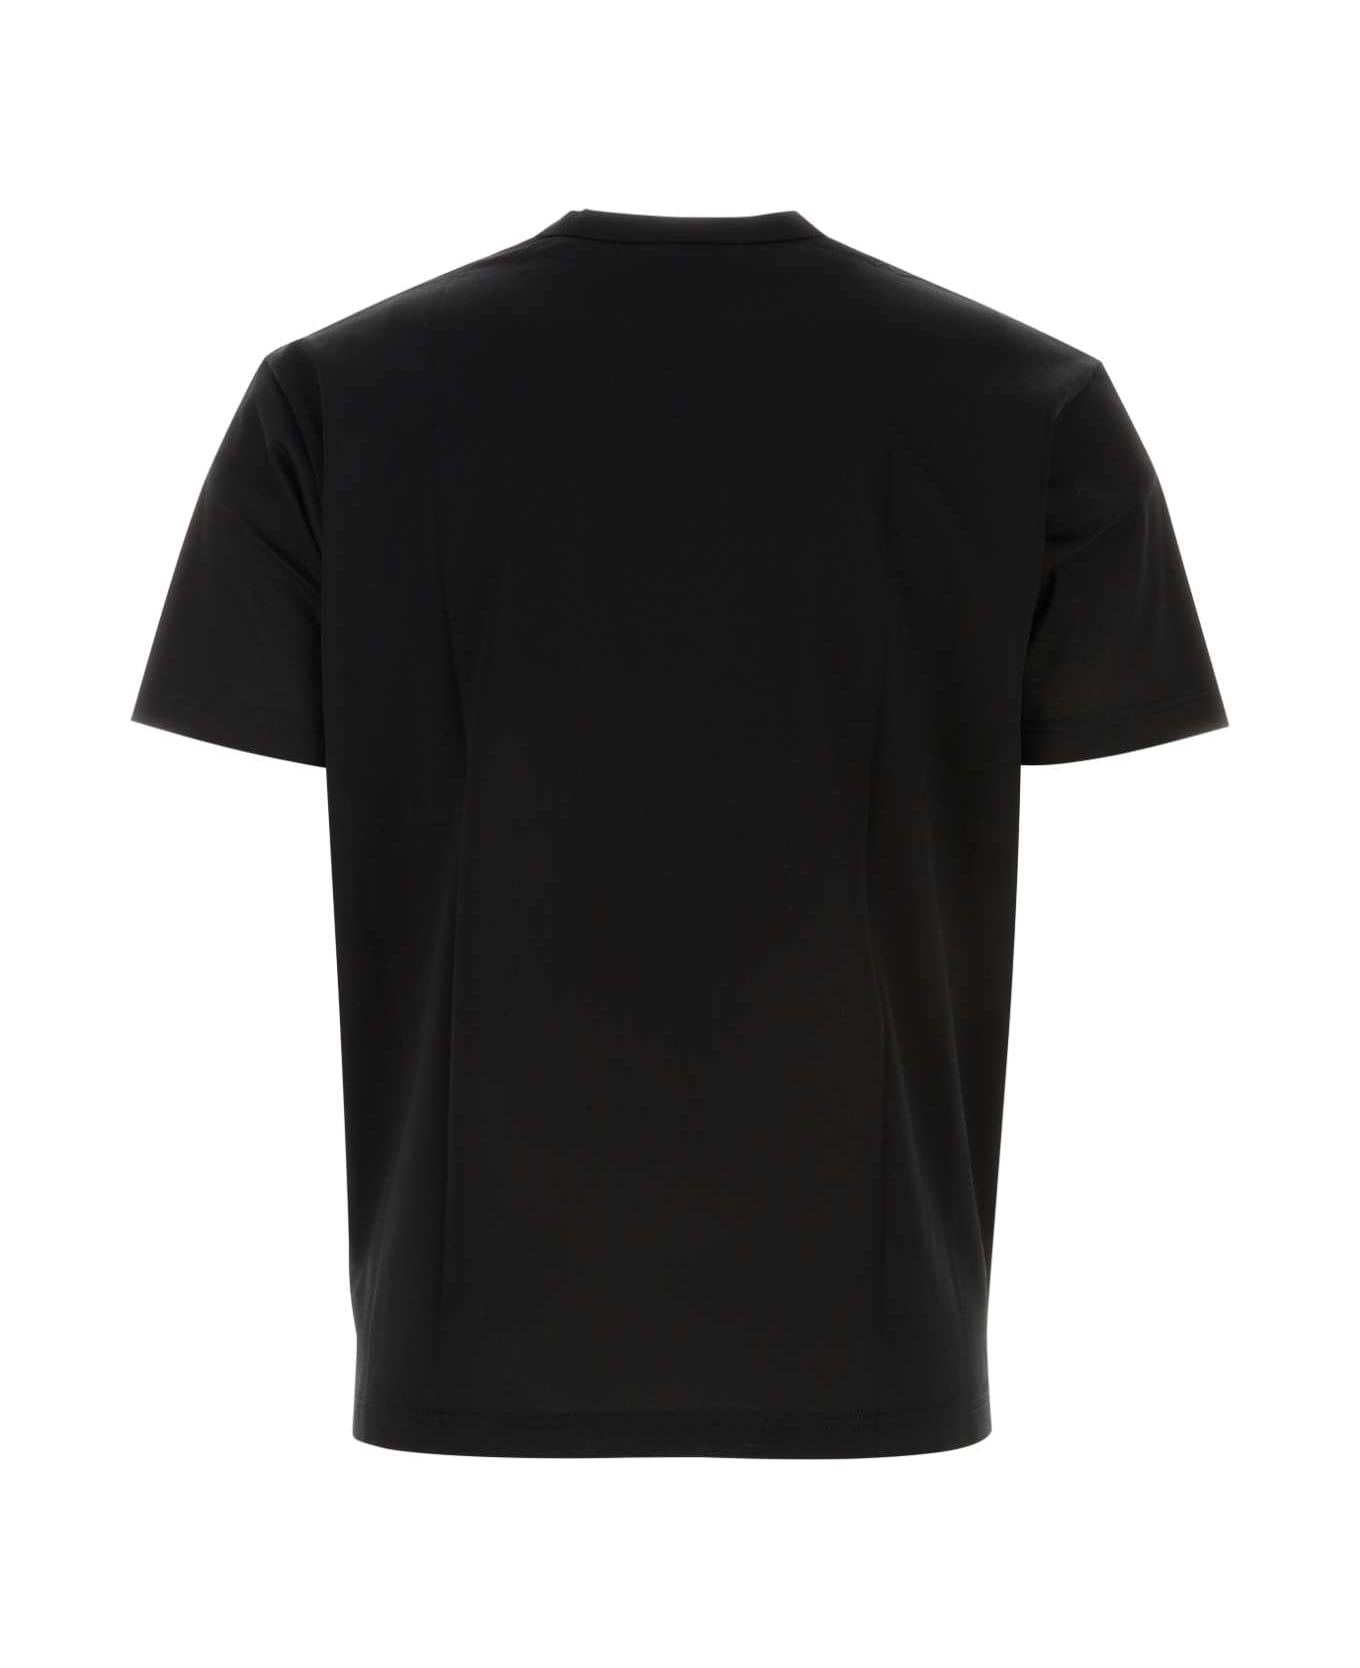 Junya Watanabe Black Cotton T-shirt - BLACKRED